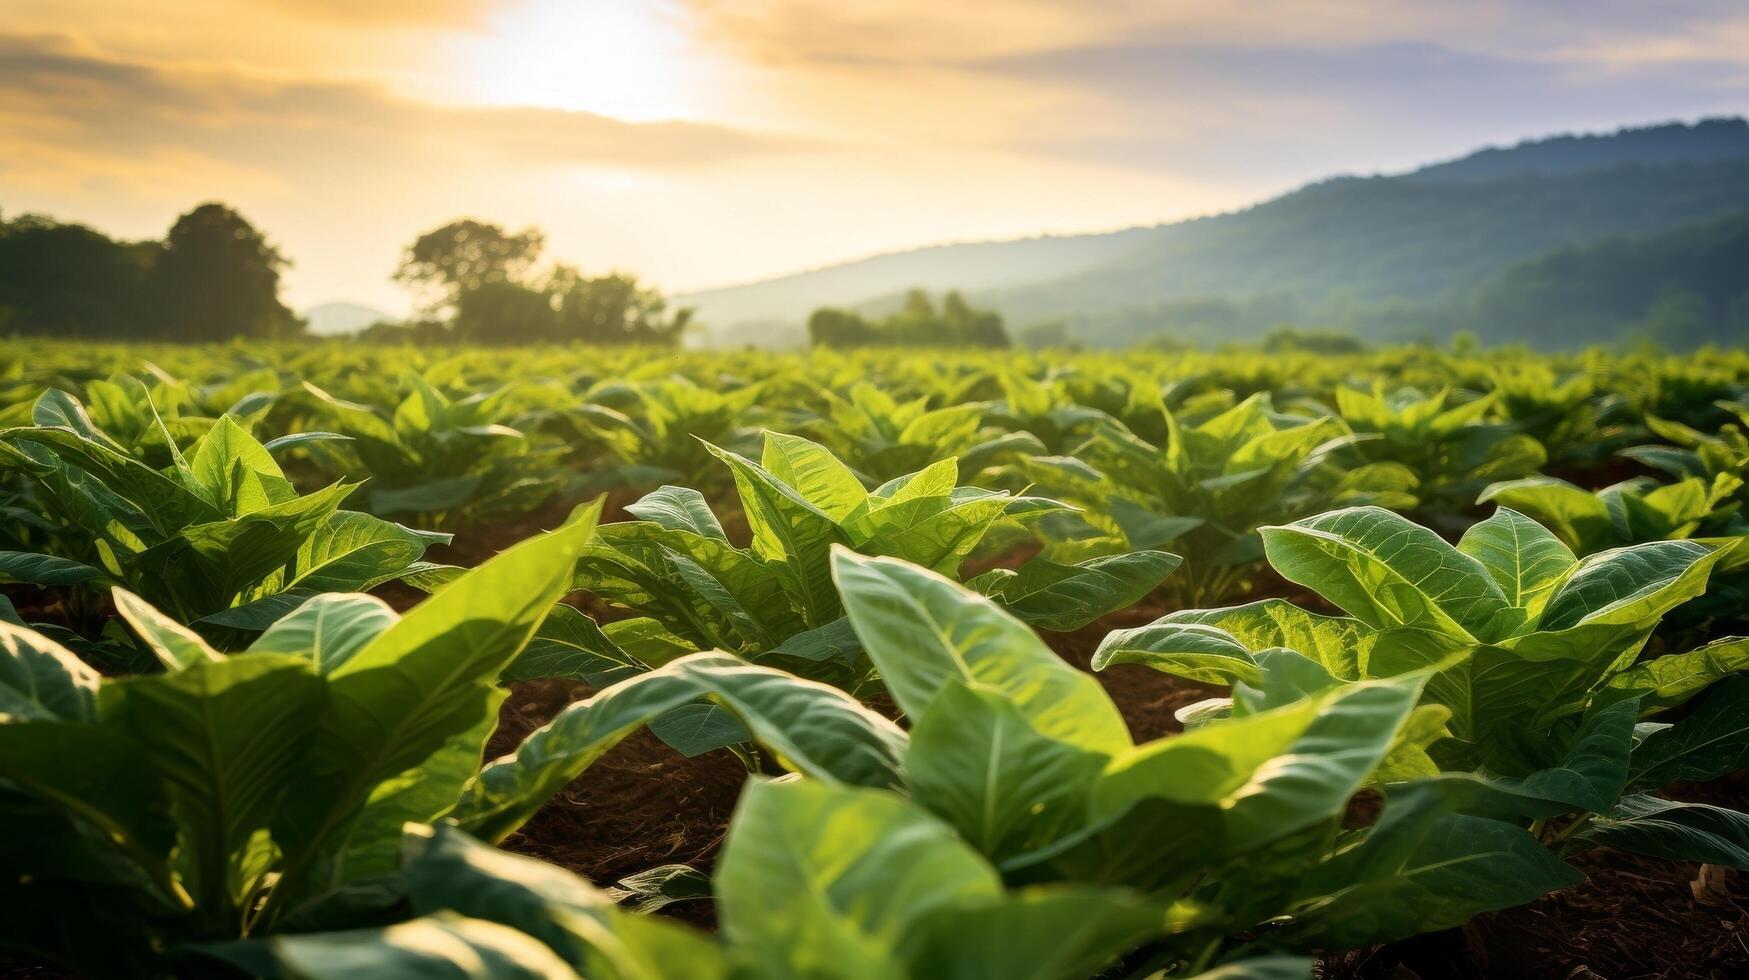 AI generated Mature tobacco plants in a sunlit field photo